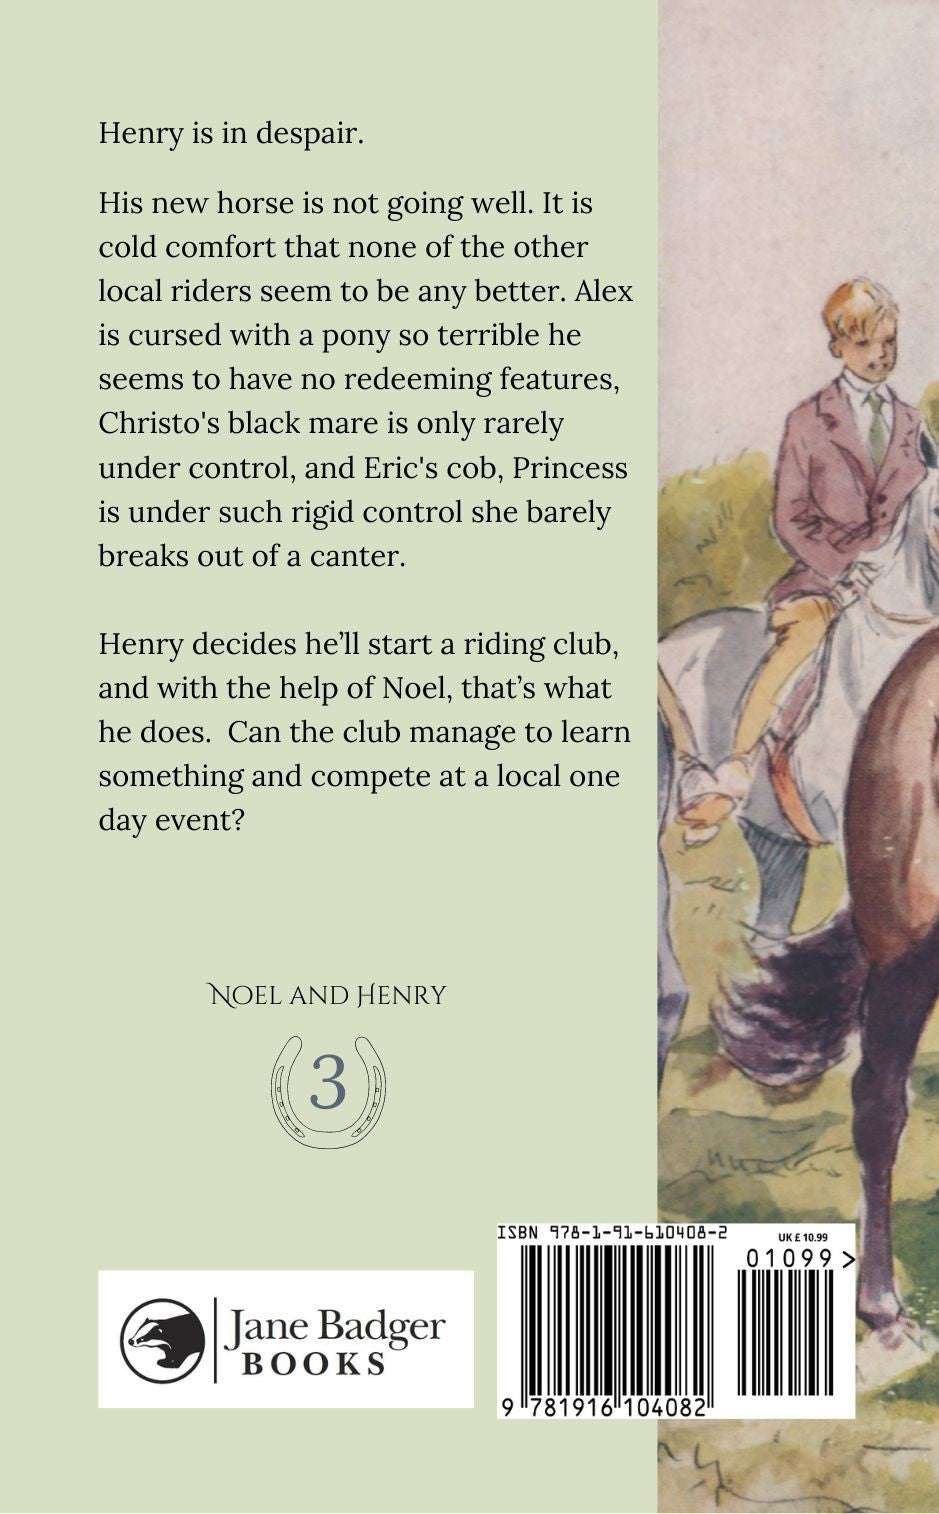 Josephine Pullein-Thompson: The Radney Riding Club (paperback)